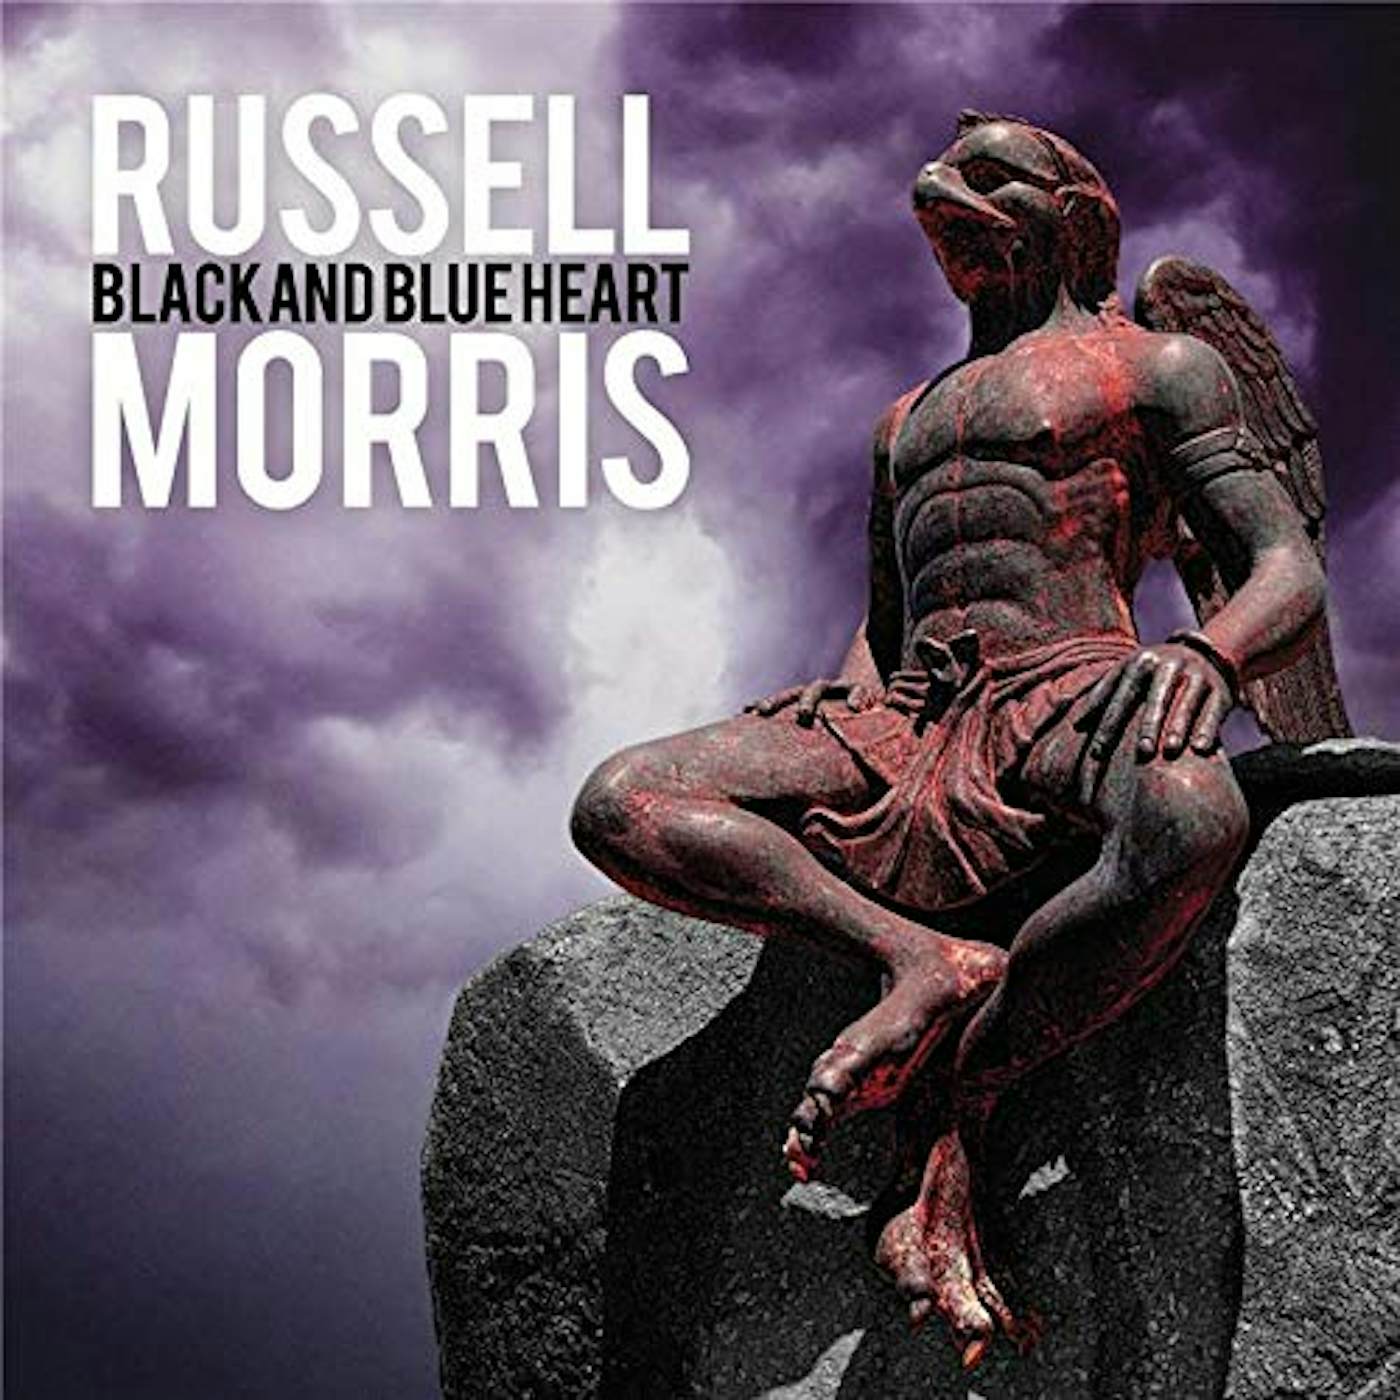 Russell Morris BLACK & BLUE HEART CD